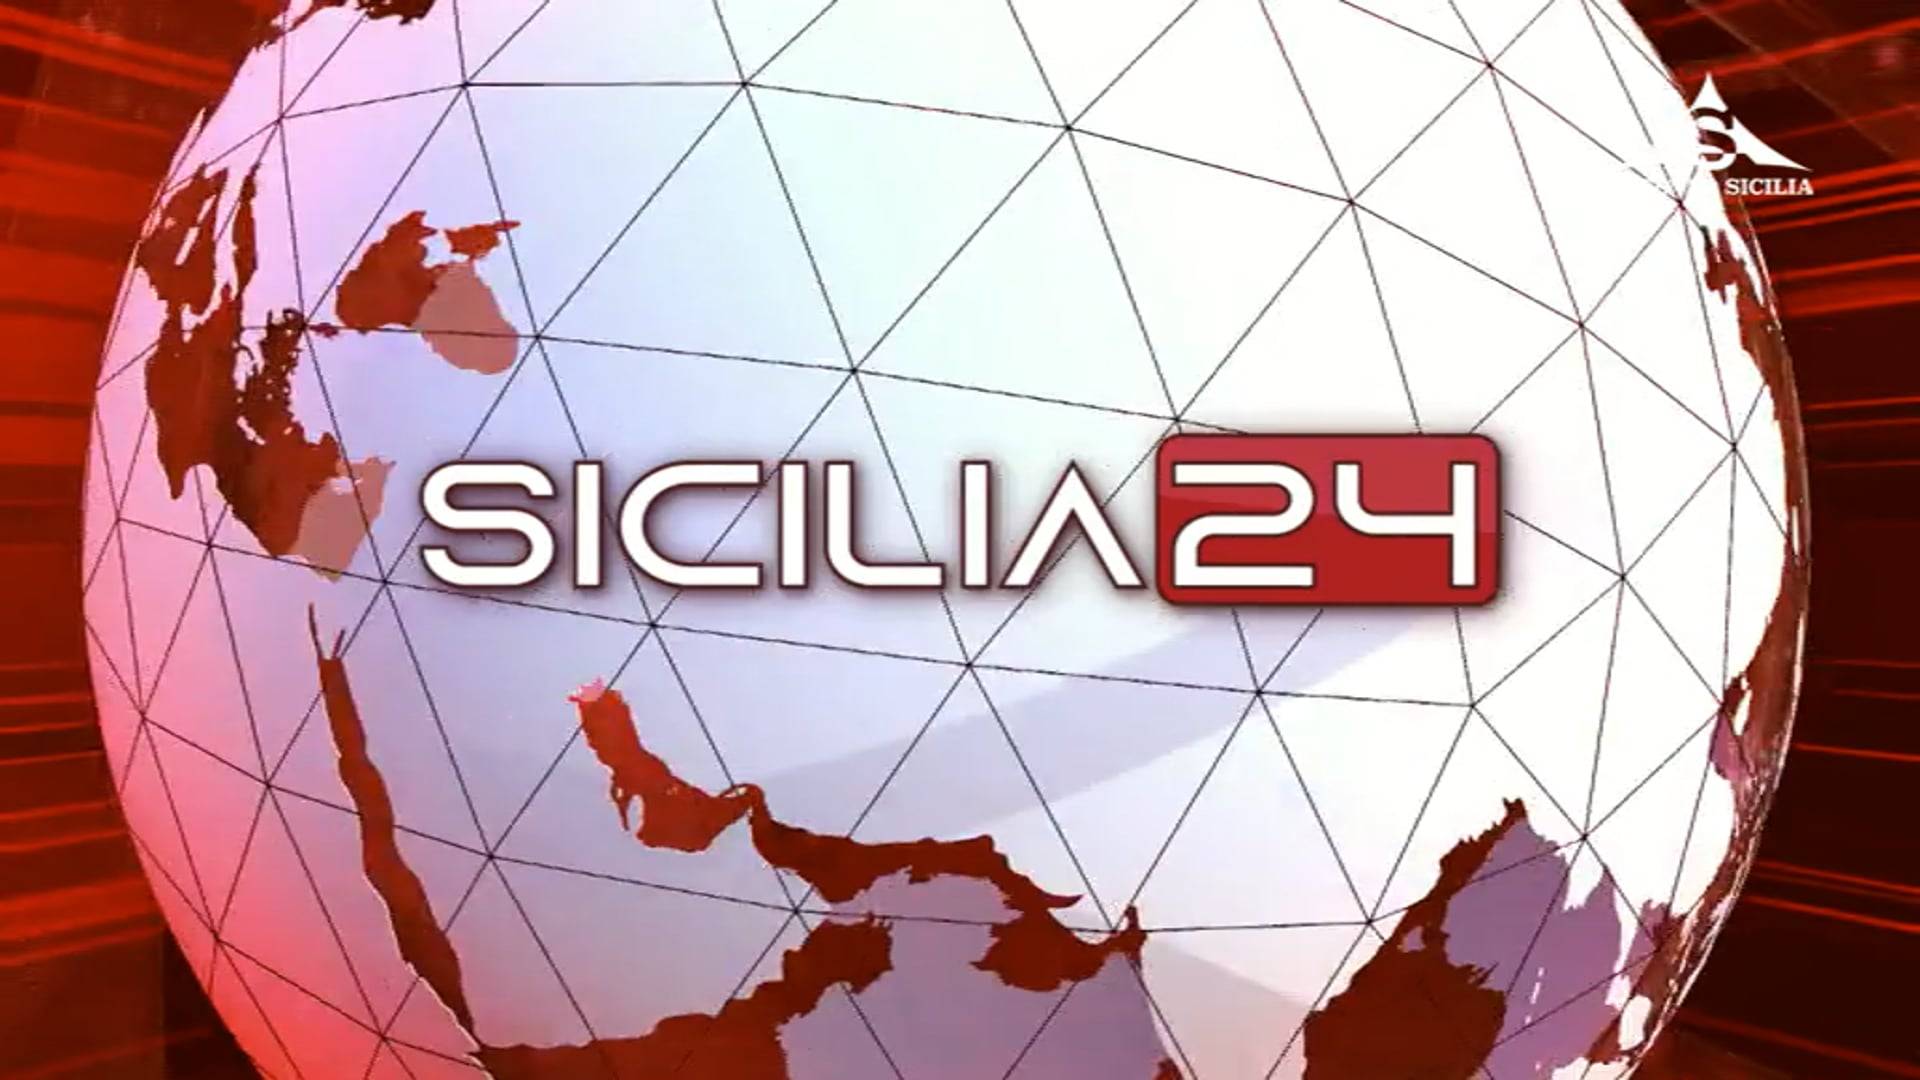 sicilia24-rassegna-stampa-10-marzo-2022-vimeo-thumbnail.jpg